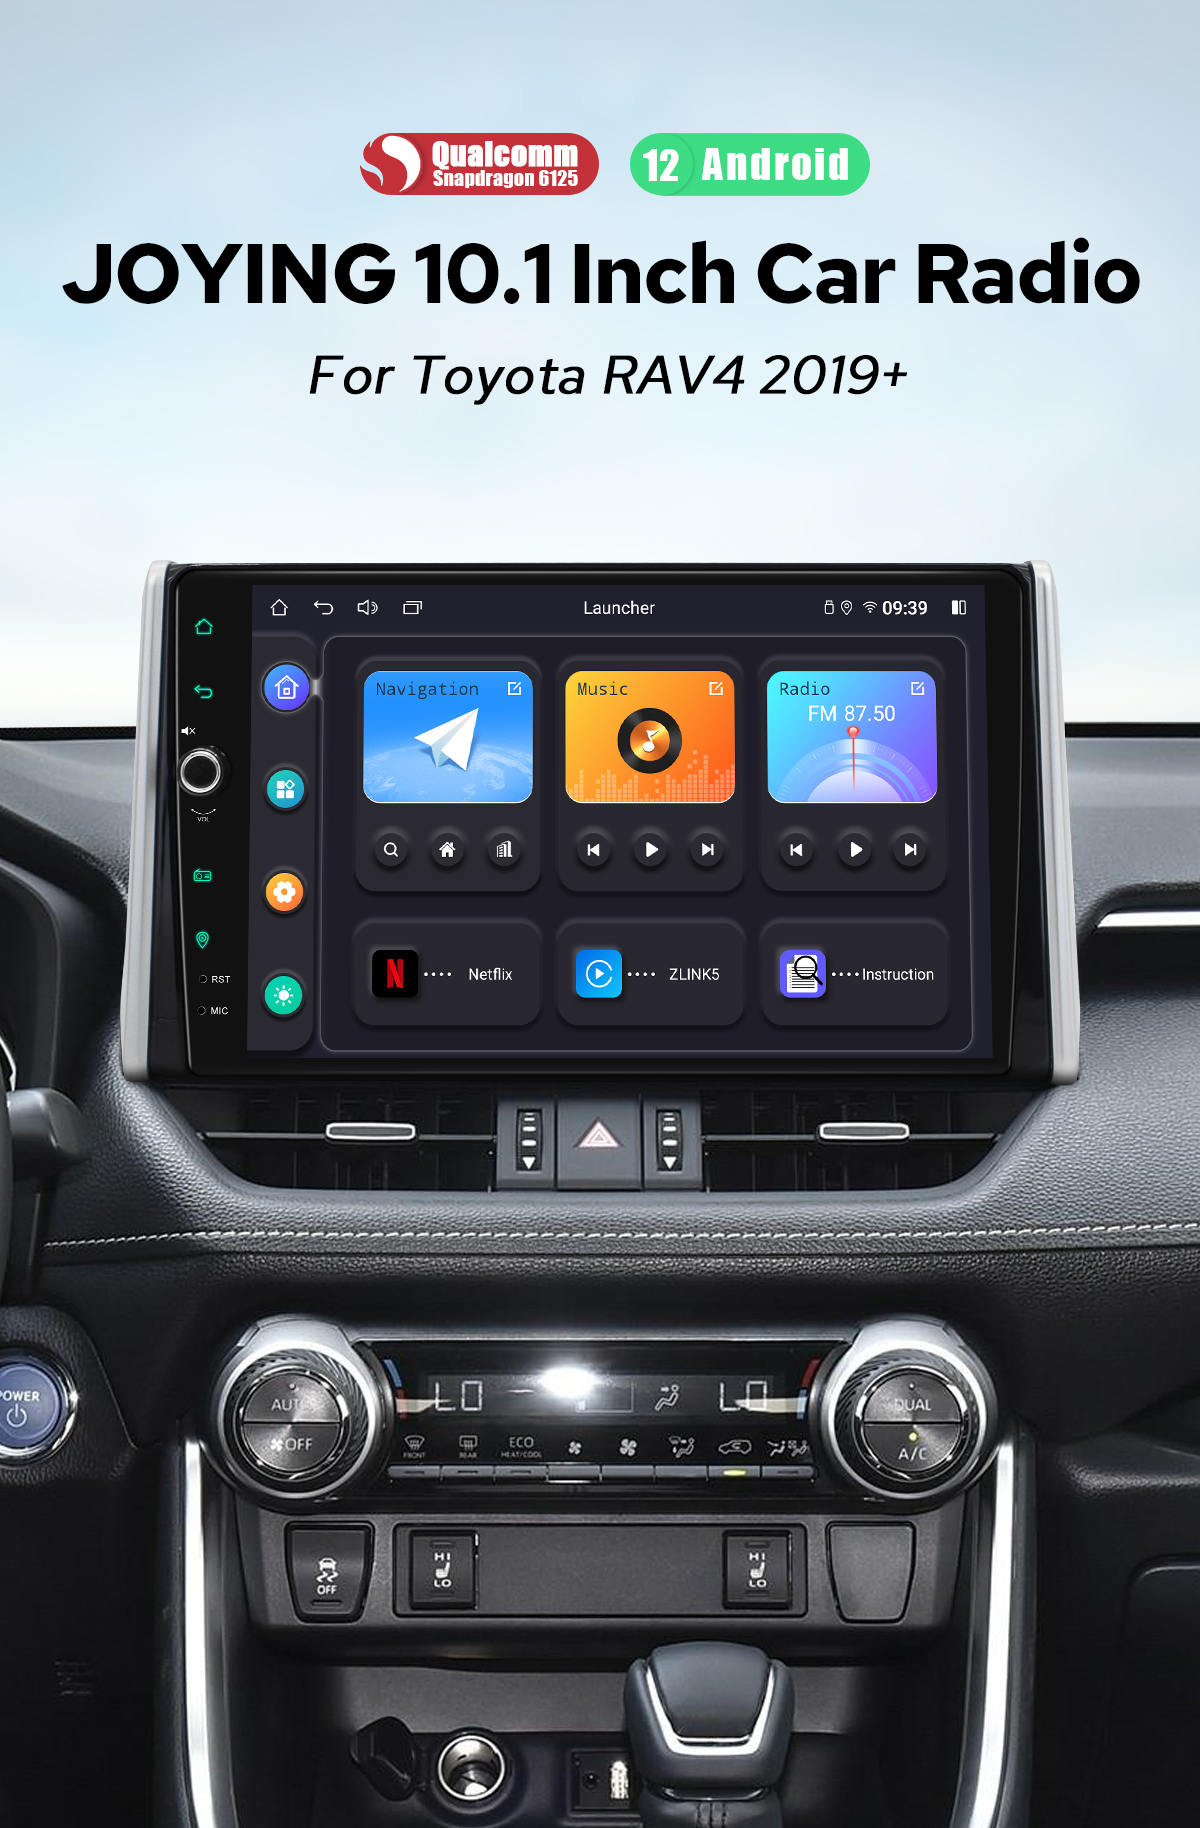 Joying Latest Toyota RAV4+ Android 12 head unit support factory USB